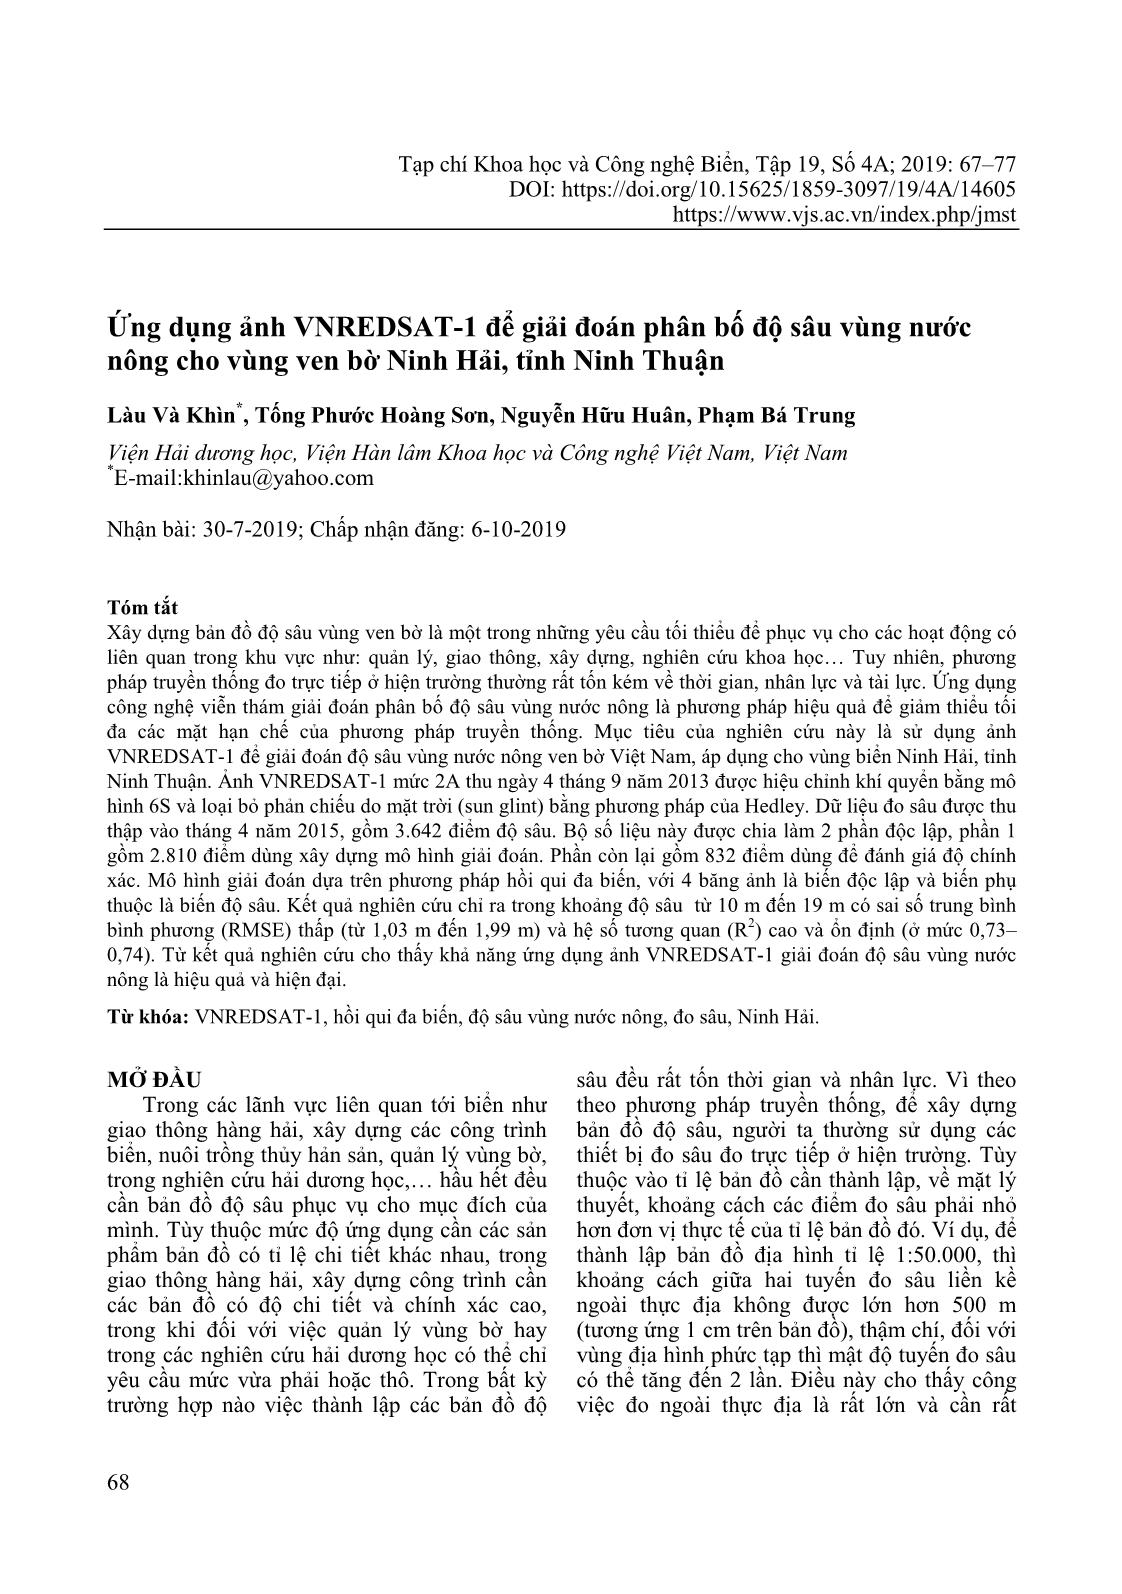 Bathymetry mapping using VNREDSAT-1 image: A case study in Ninh Hai coast, Ninh Thuan province of Vietnam trang 2